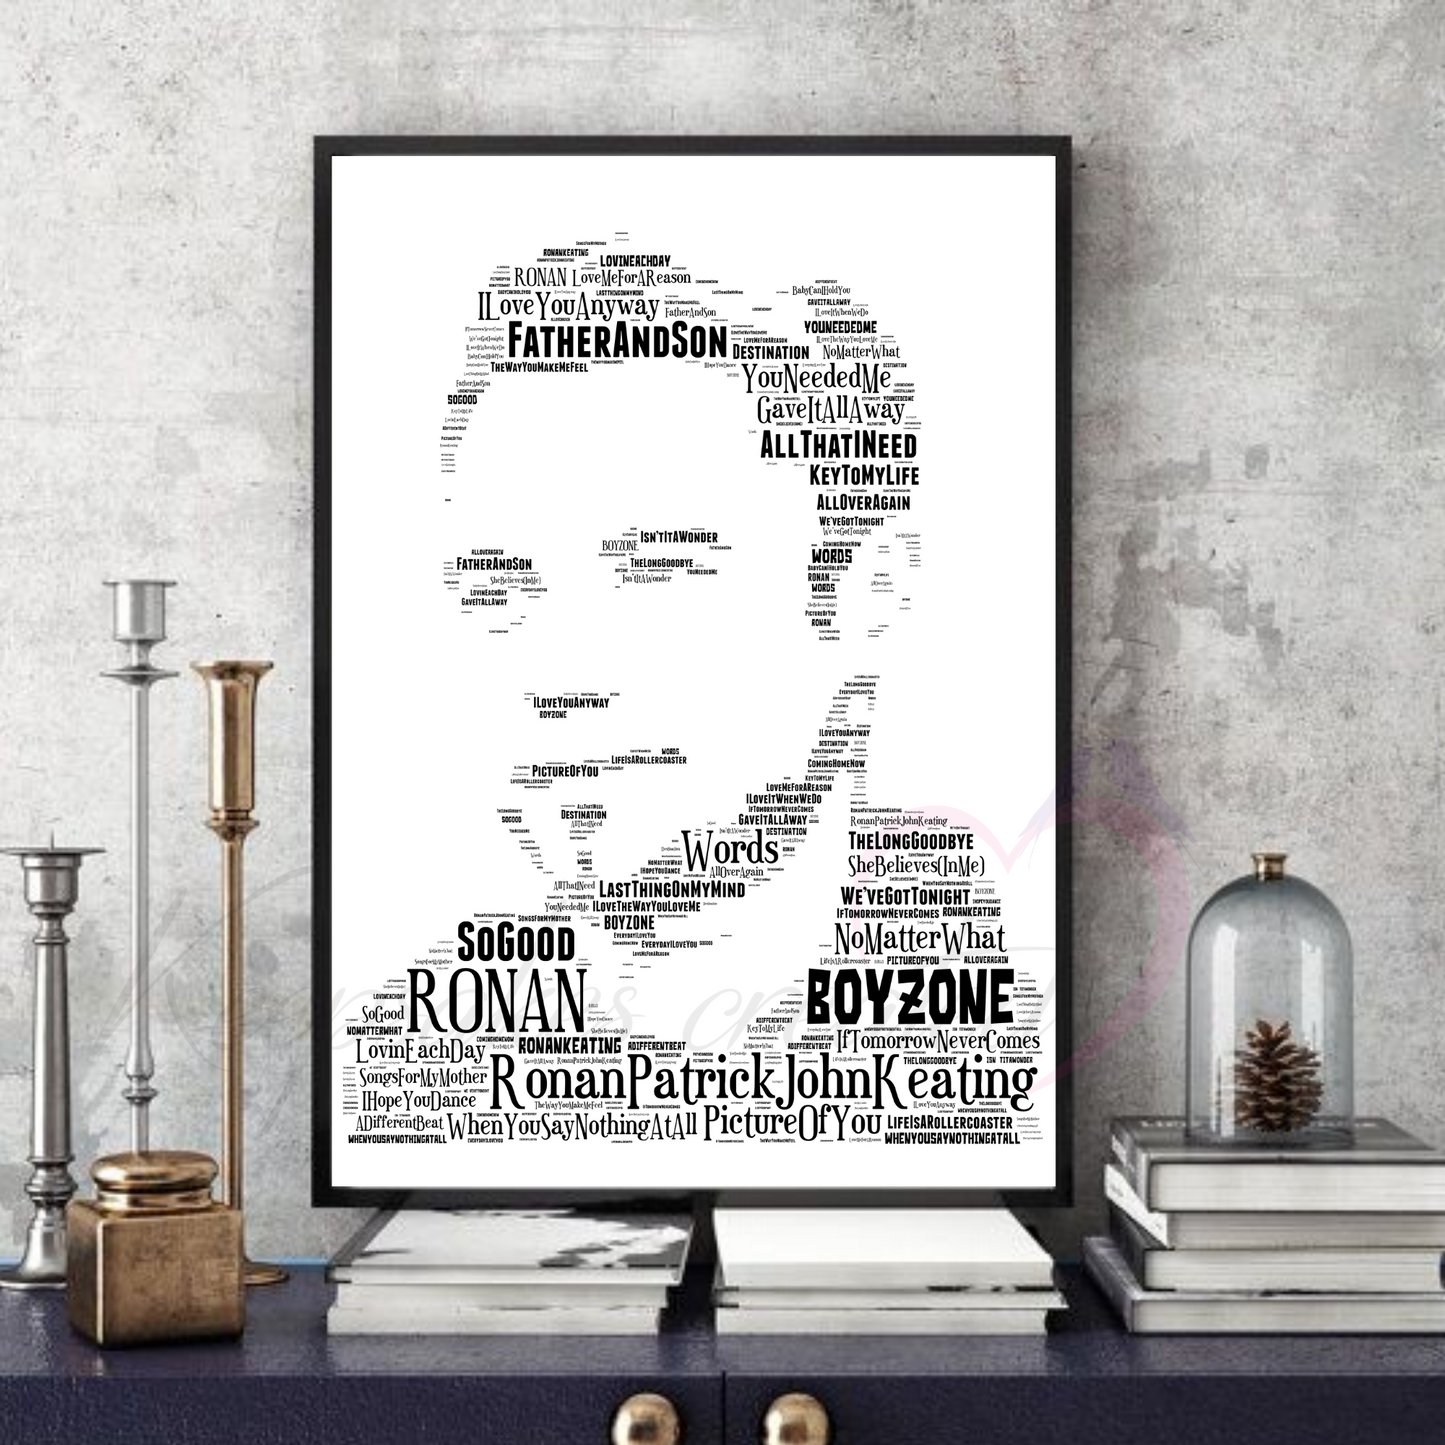 Ronan Keating - Boyzone / Word Art Typography Portrait in songs Memorabilia/Collectible/Print